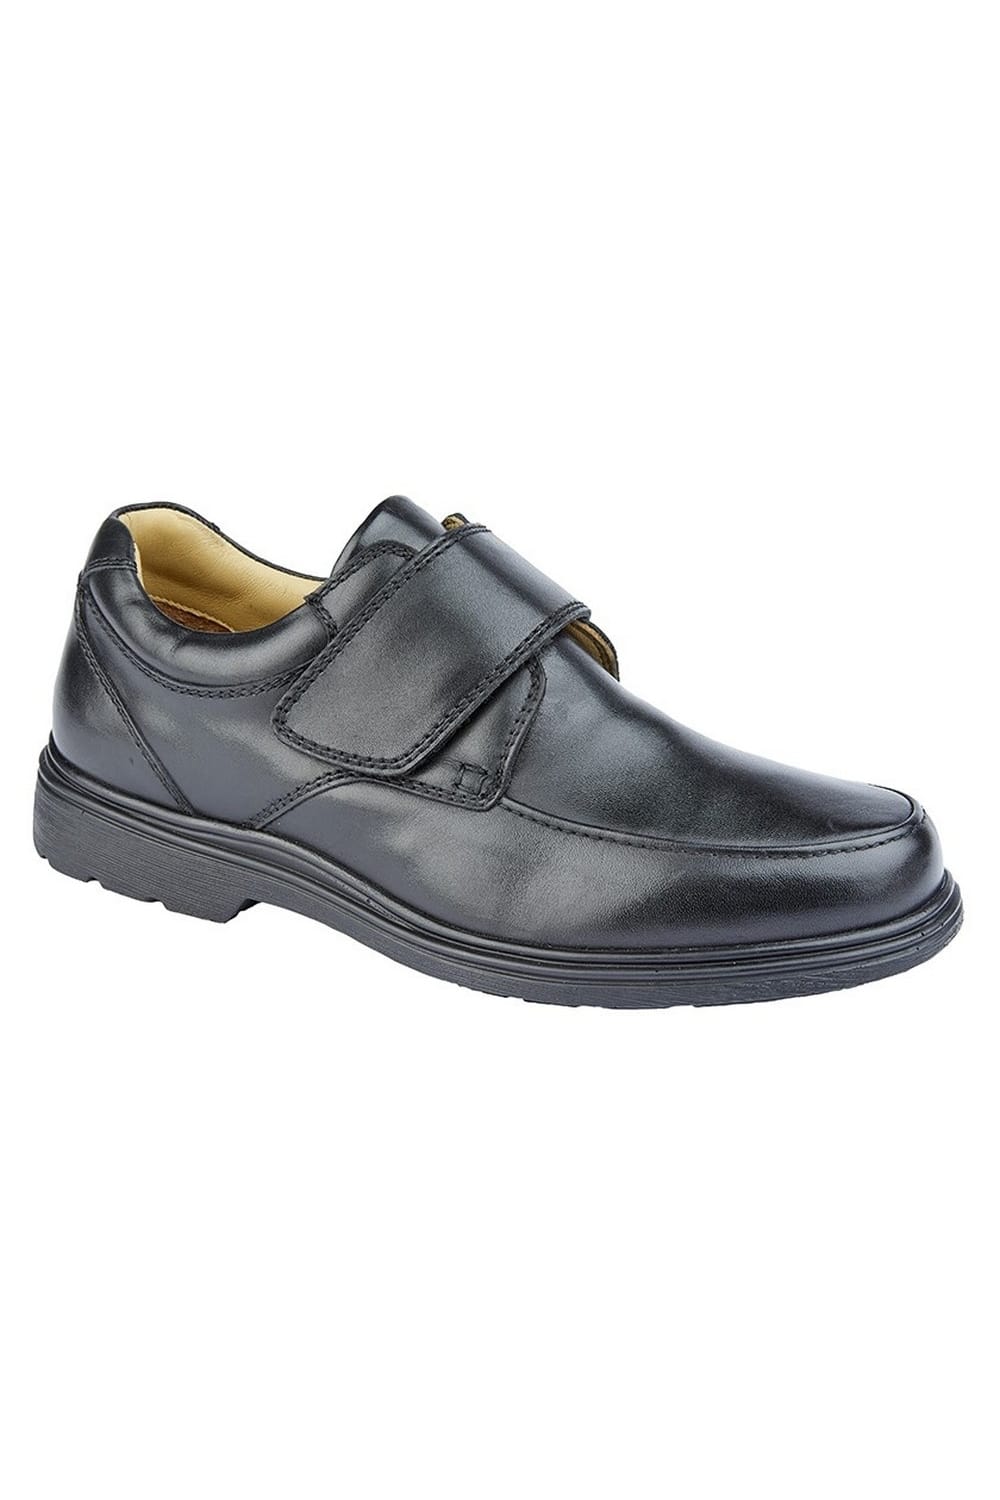 Roamers Mens Leather Shoes (Black)